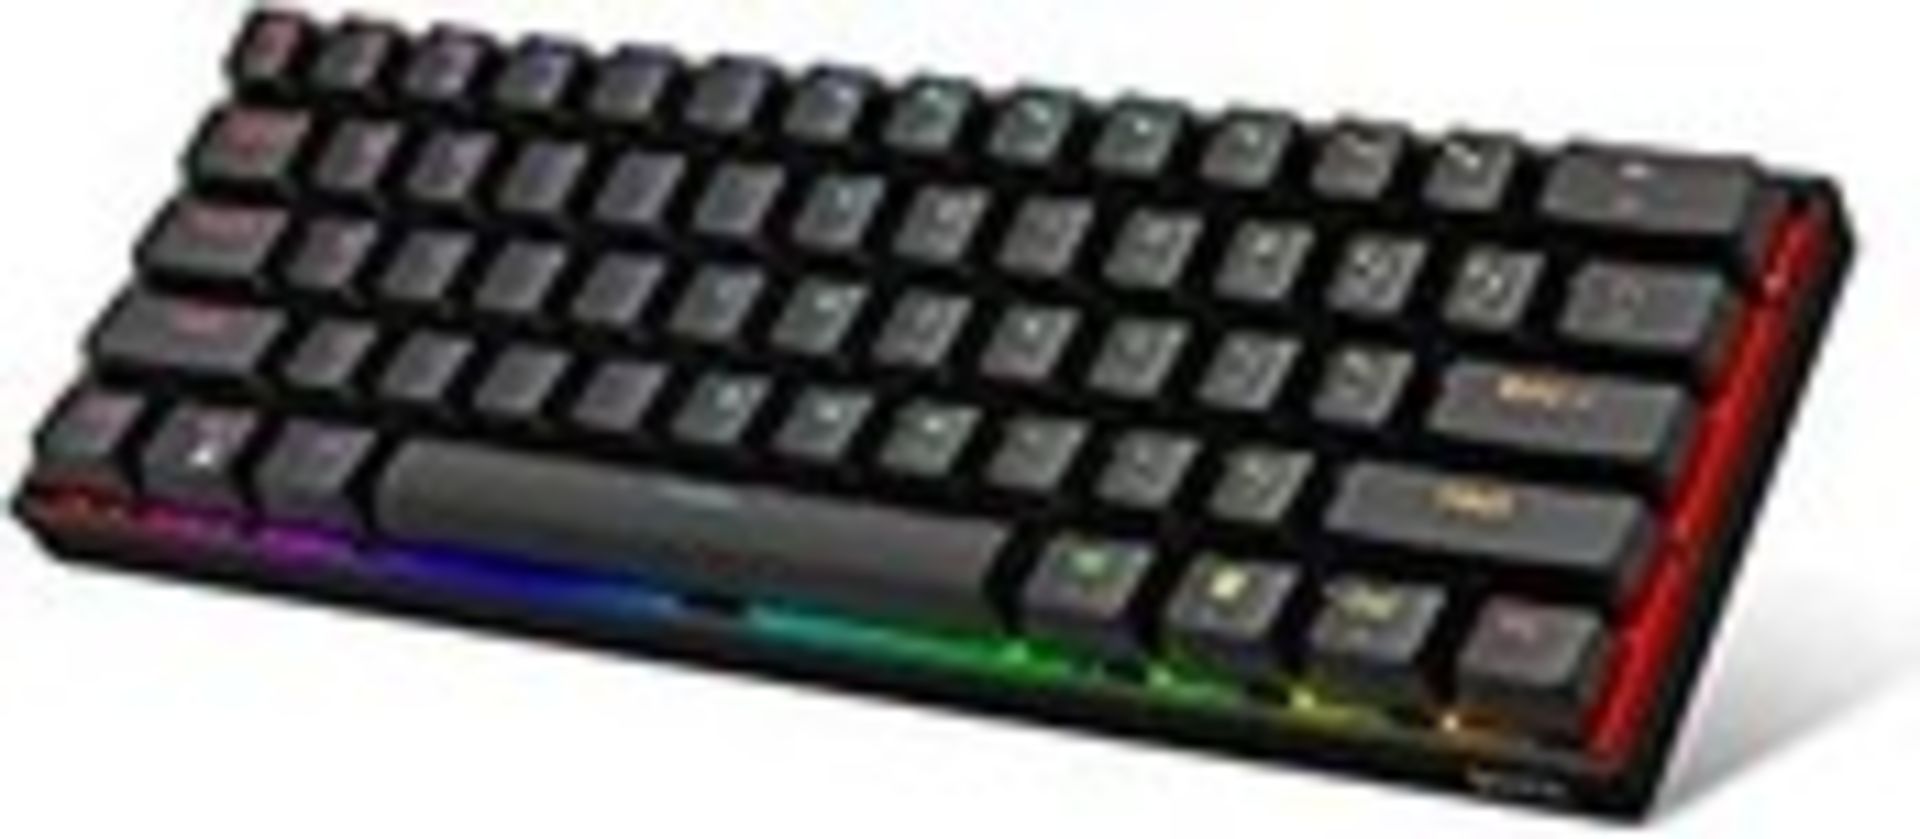 RRP £50.32 DIERYA DK61E 60% Mechanical Gaming Keyboard